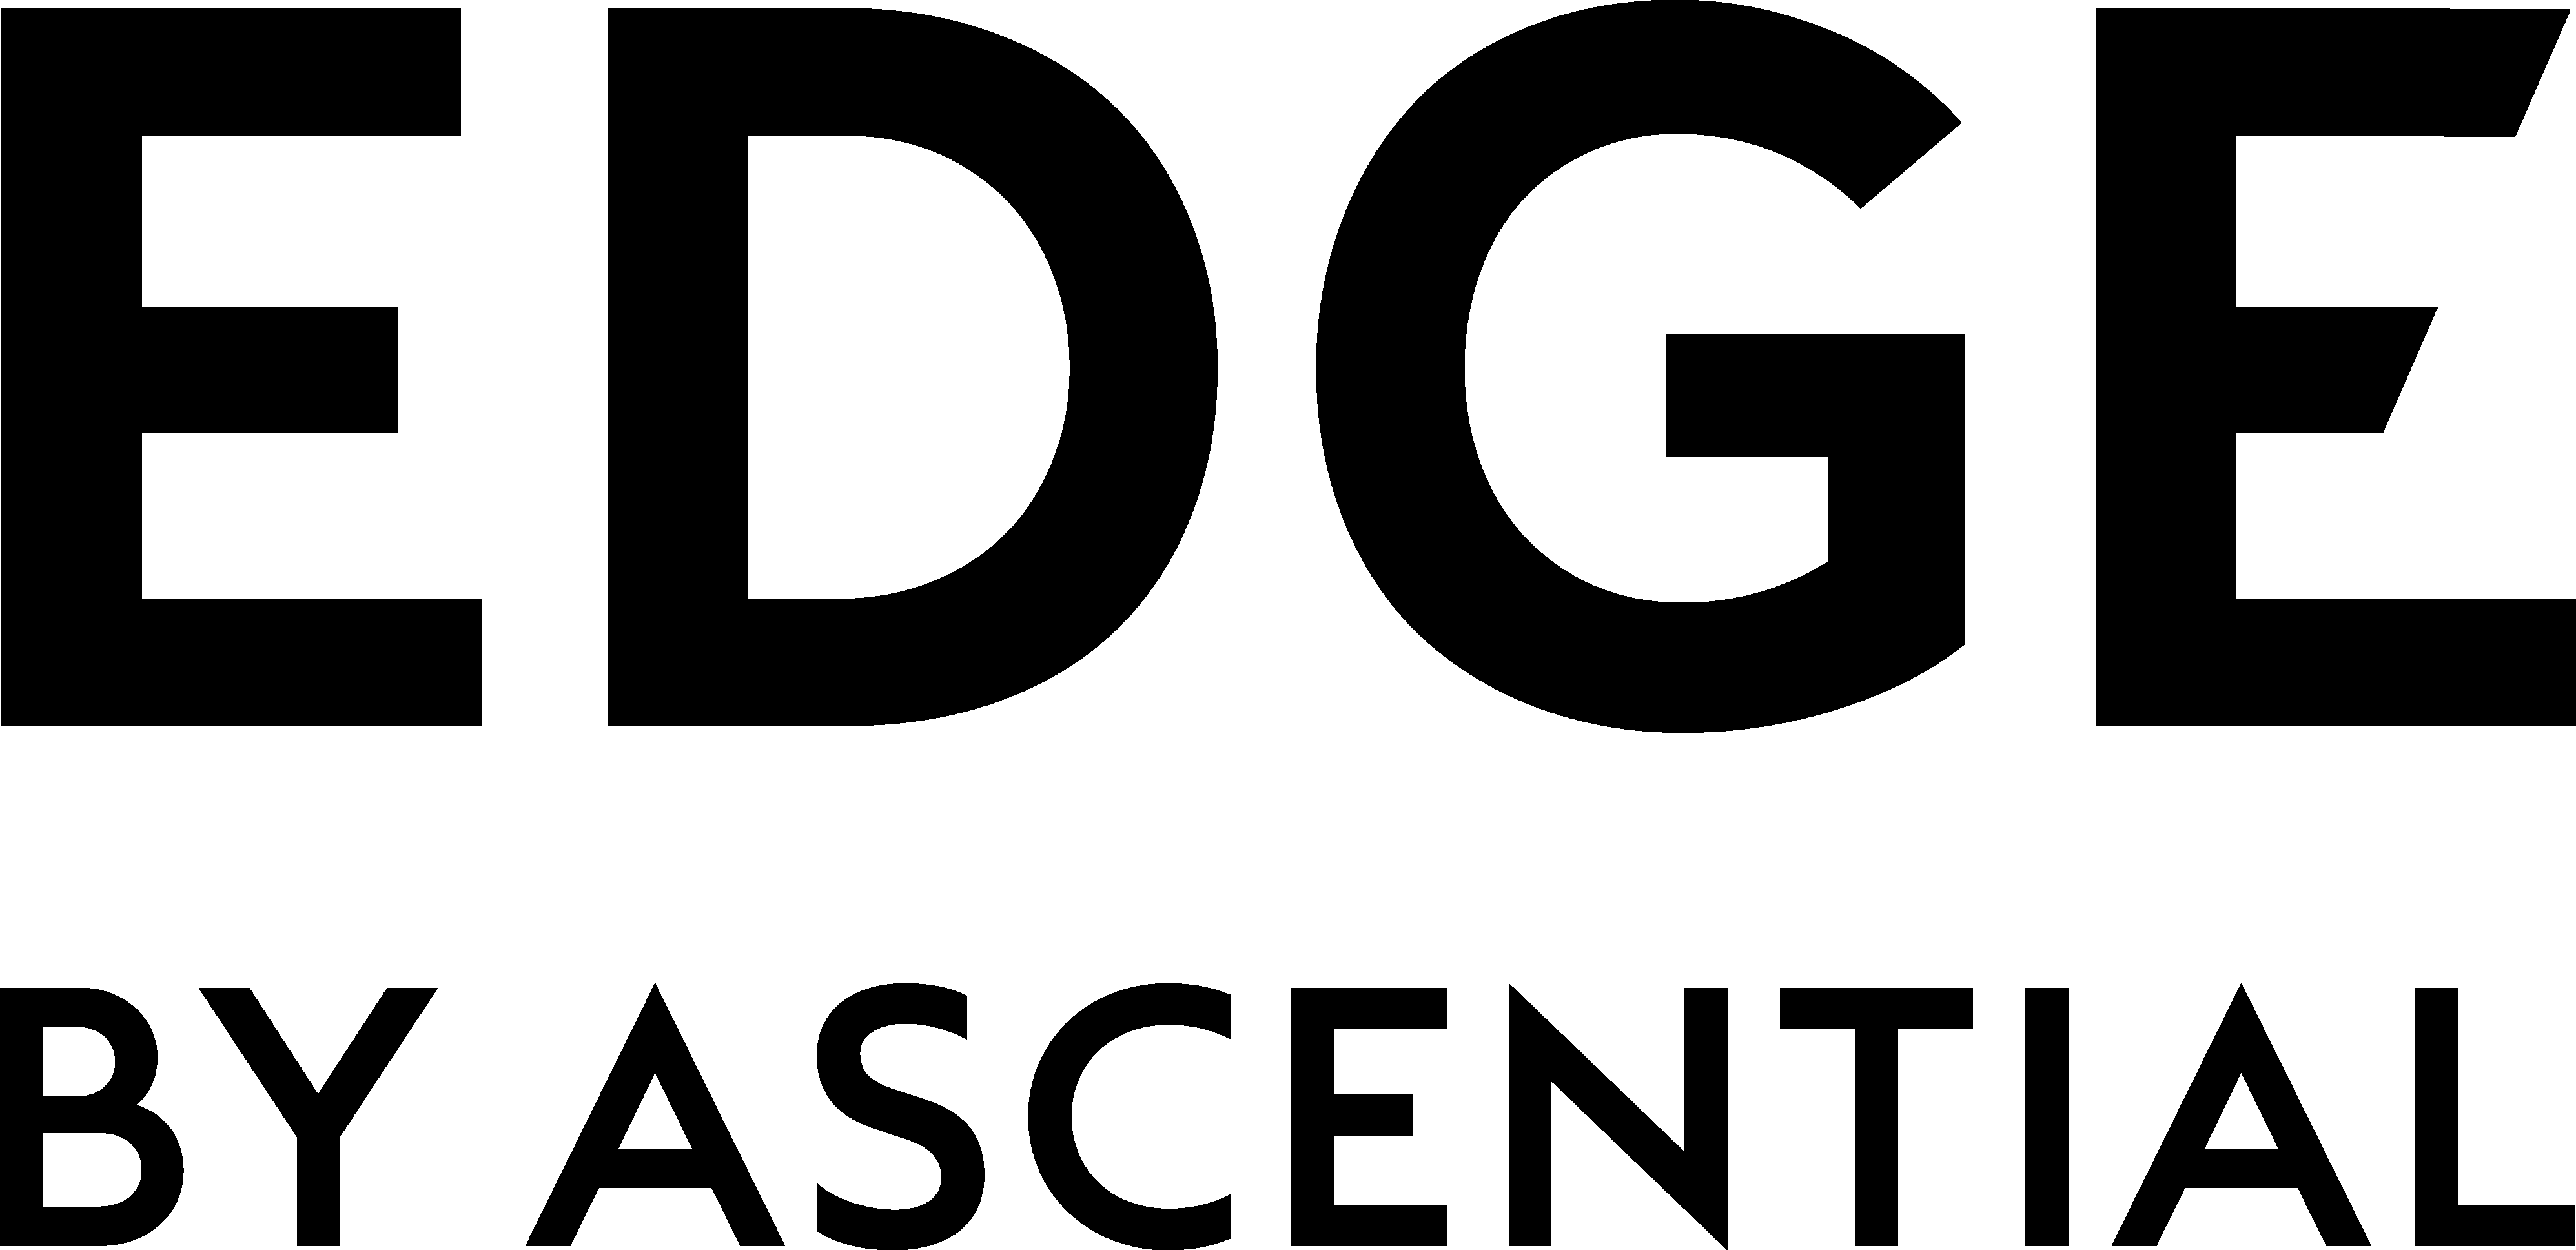 market share logo